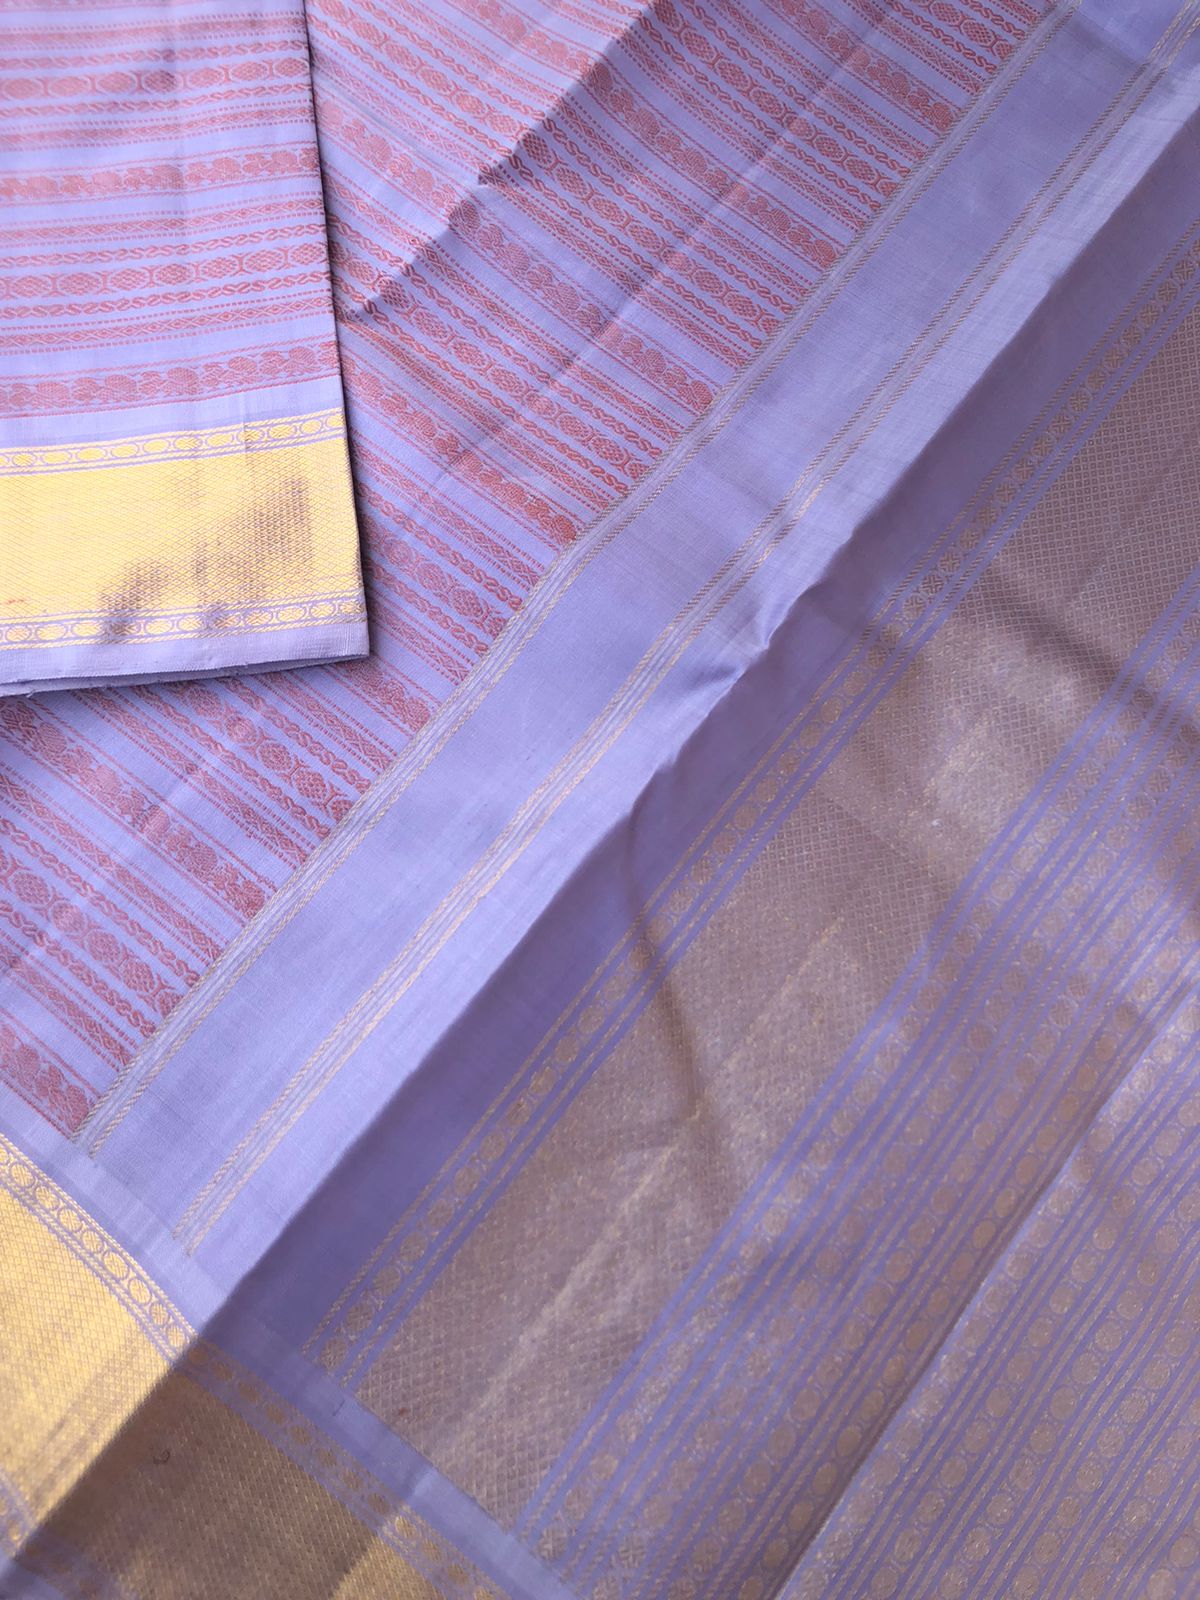 Kamakshi | Festive Vibes on Kanchivaram - varusai pett or veldhari either way we can call on a stunning powder blue/pale lavender with gold zari woven pallu and borders